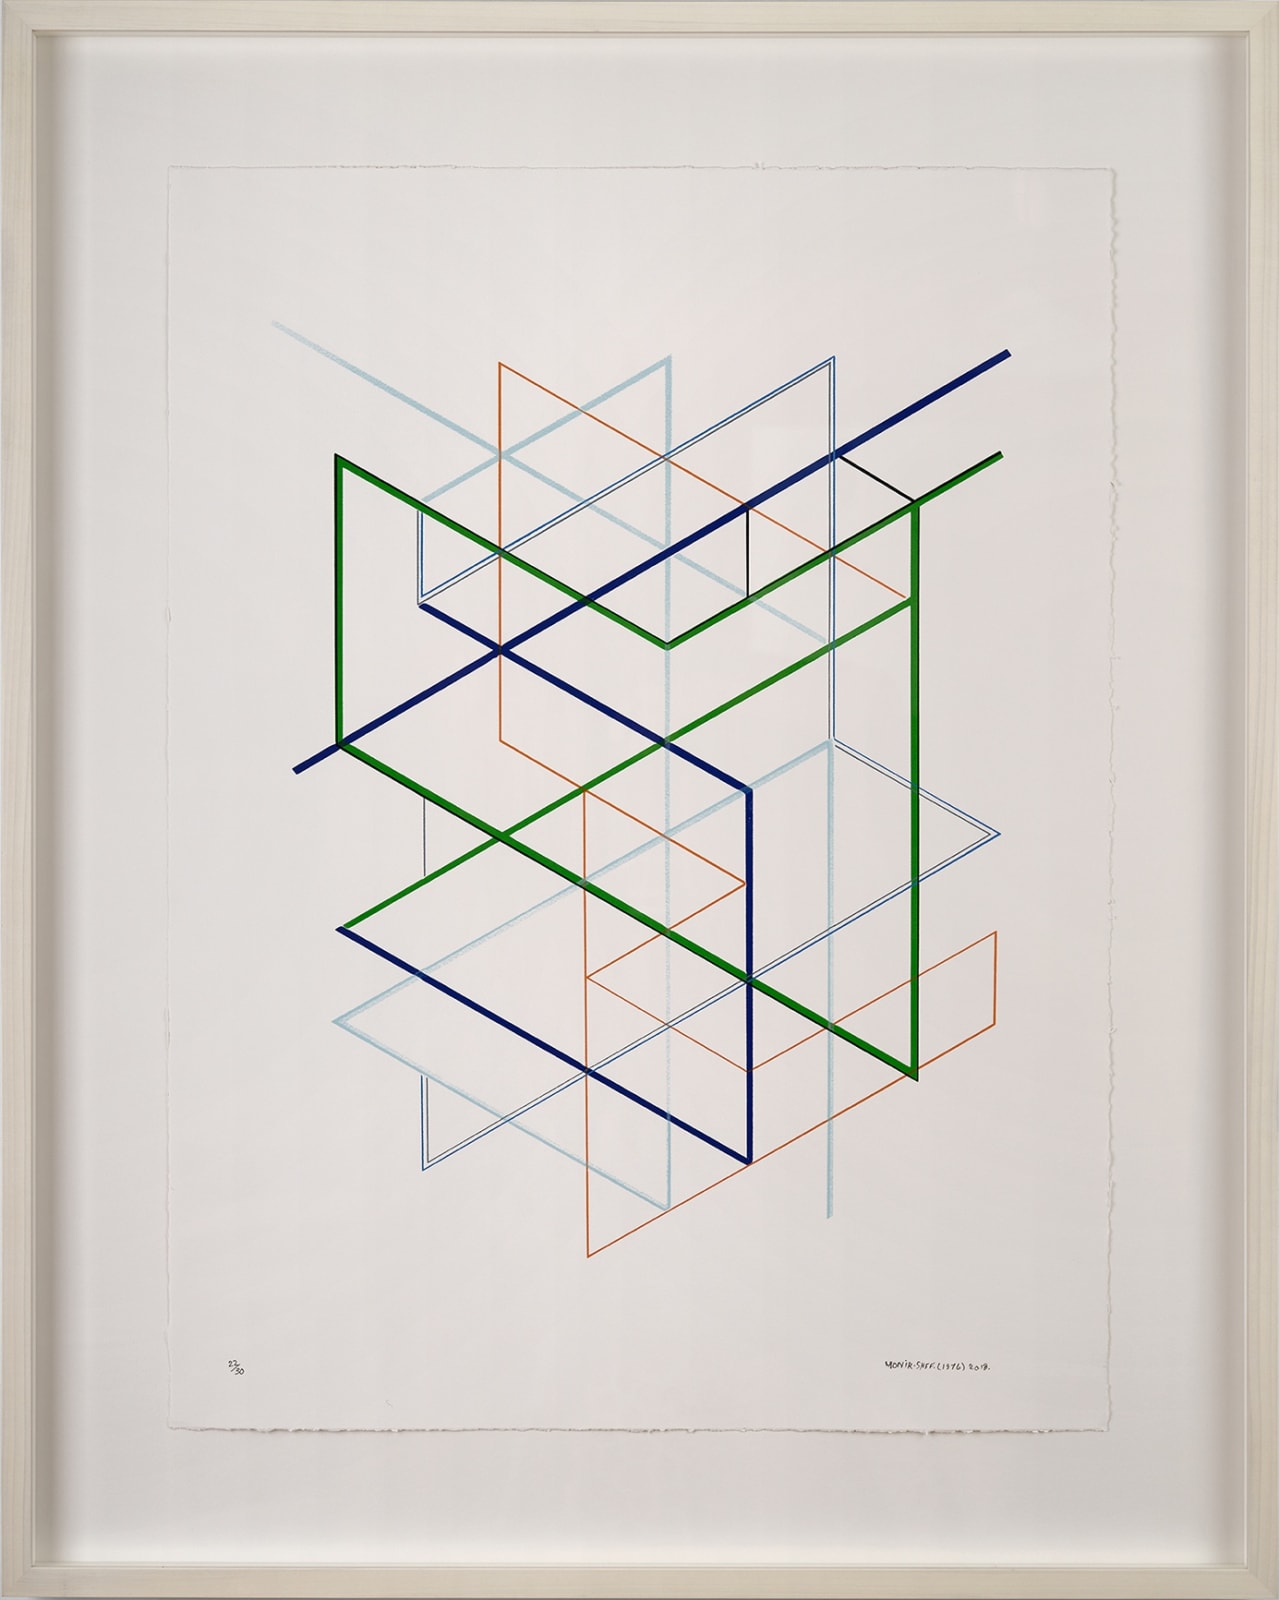 Monir Farmanfarmaian Untitled 2018 Silkscreen print on paper Edition 22 / 30 102 x 81 cm framed